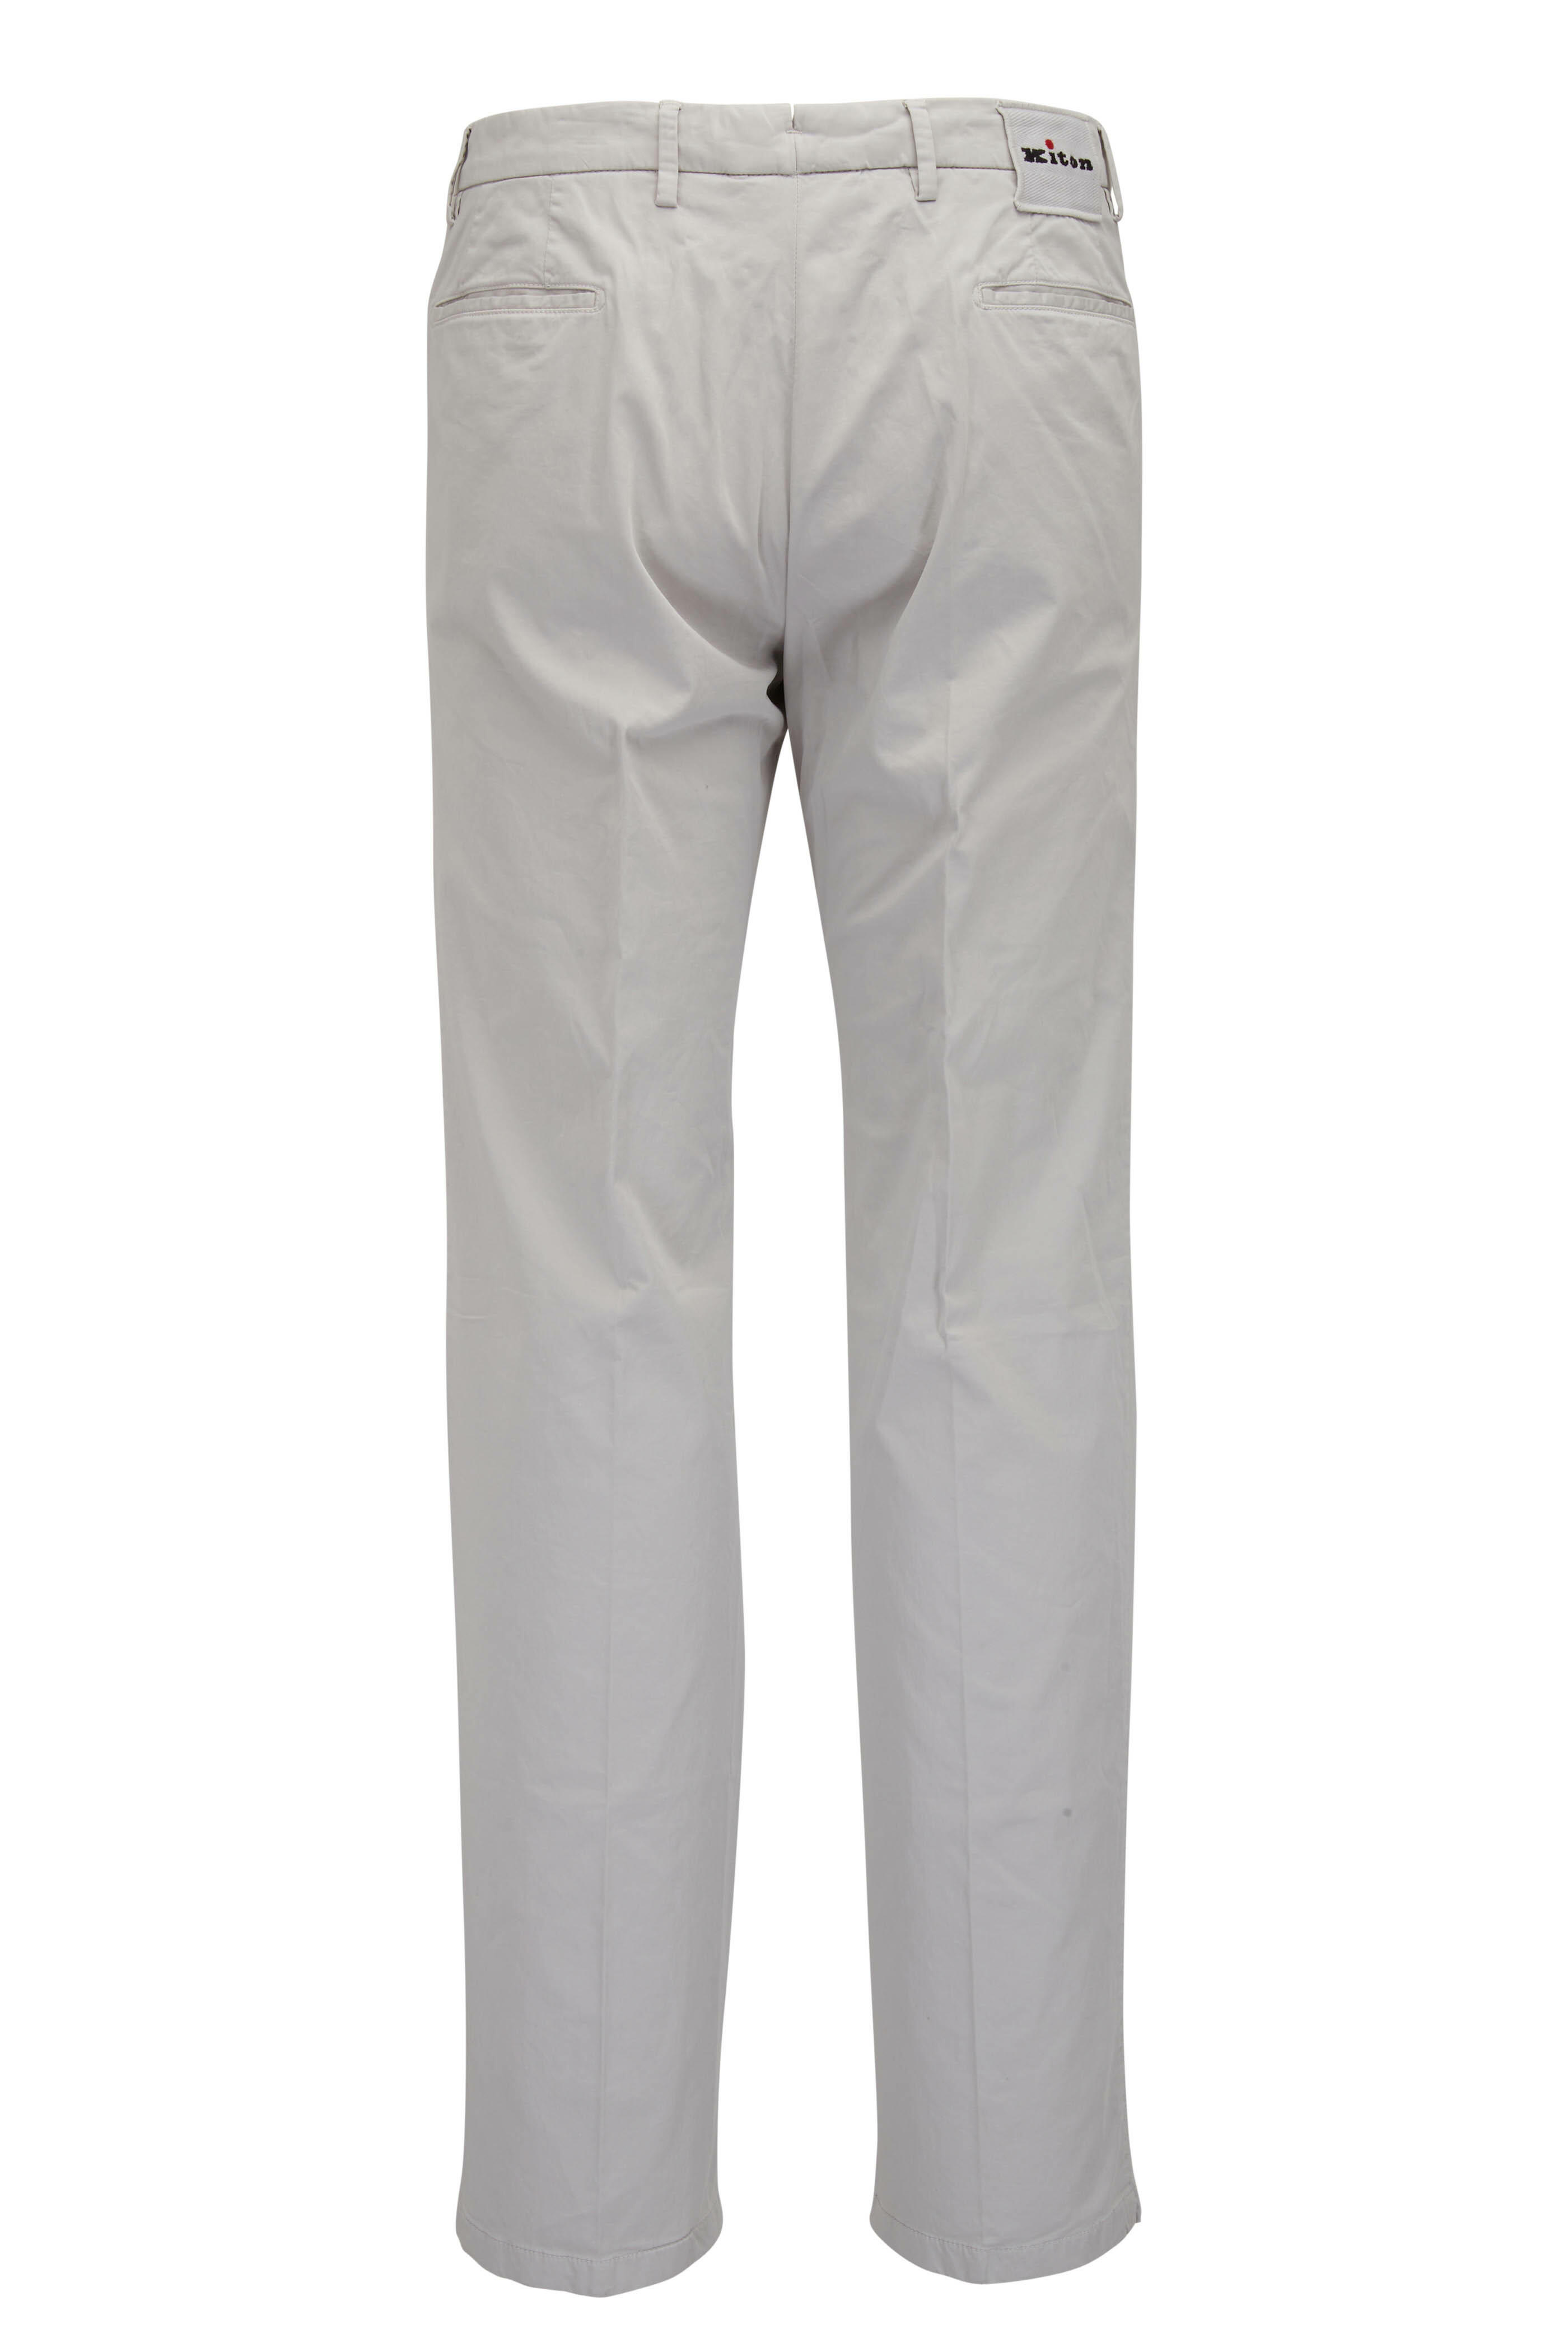 Kiton - Stone Cotton Stretch Flat Front Pant | Mitchell Stores